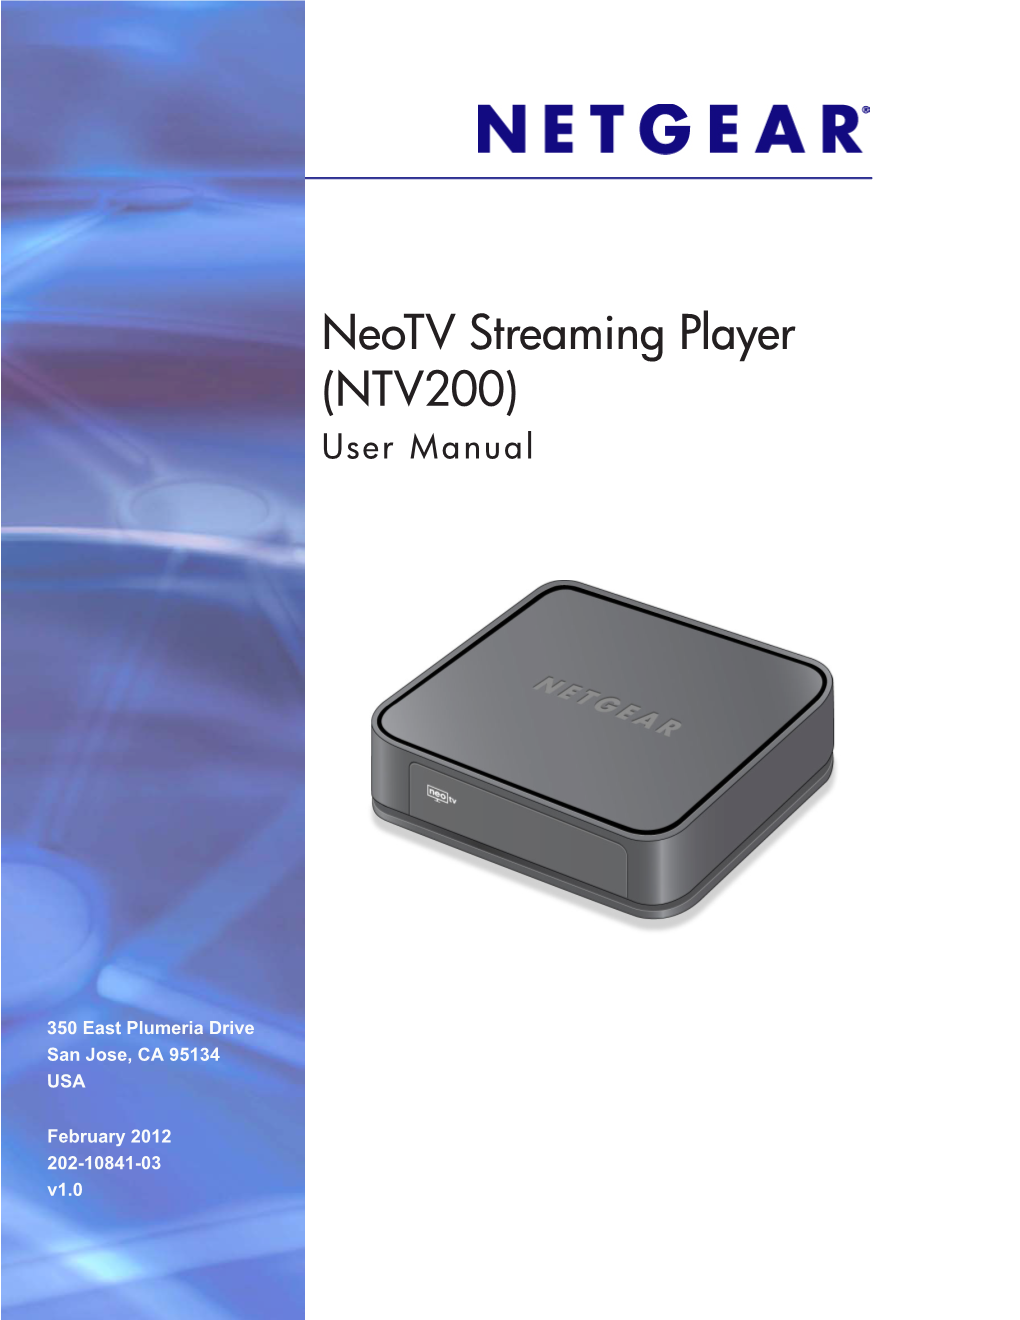 Neotv Streaming Player (NTV200) User Manual